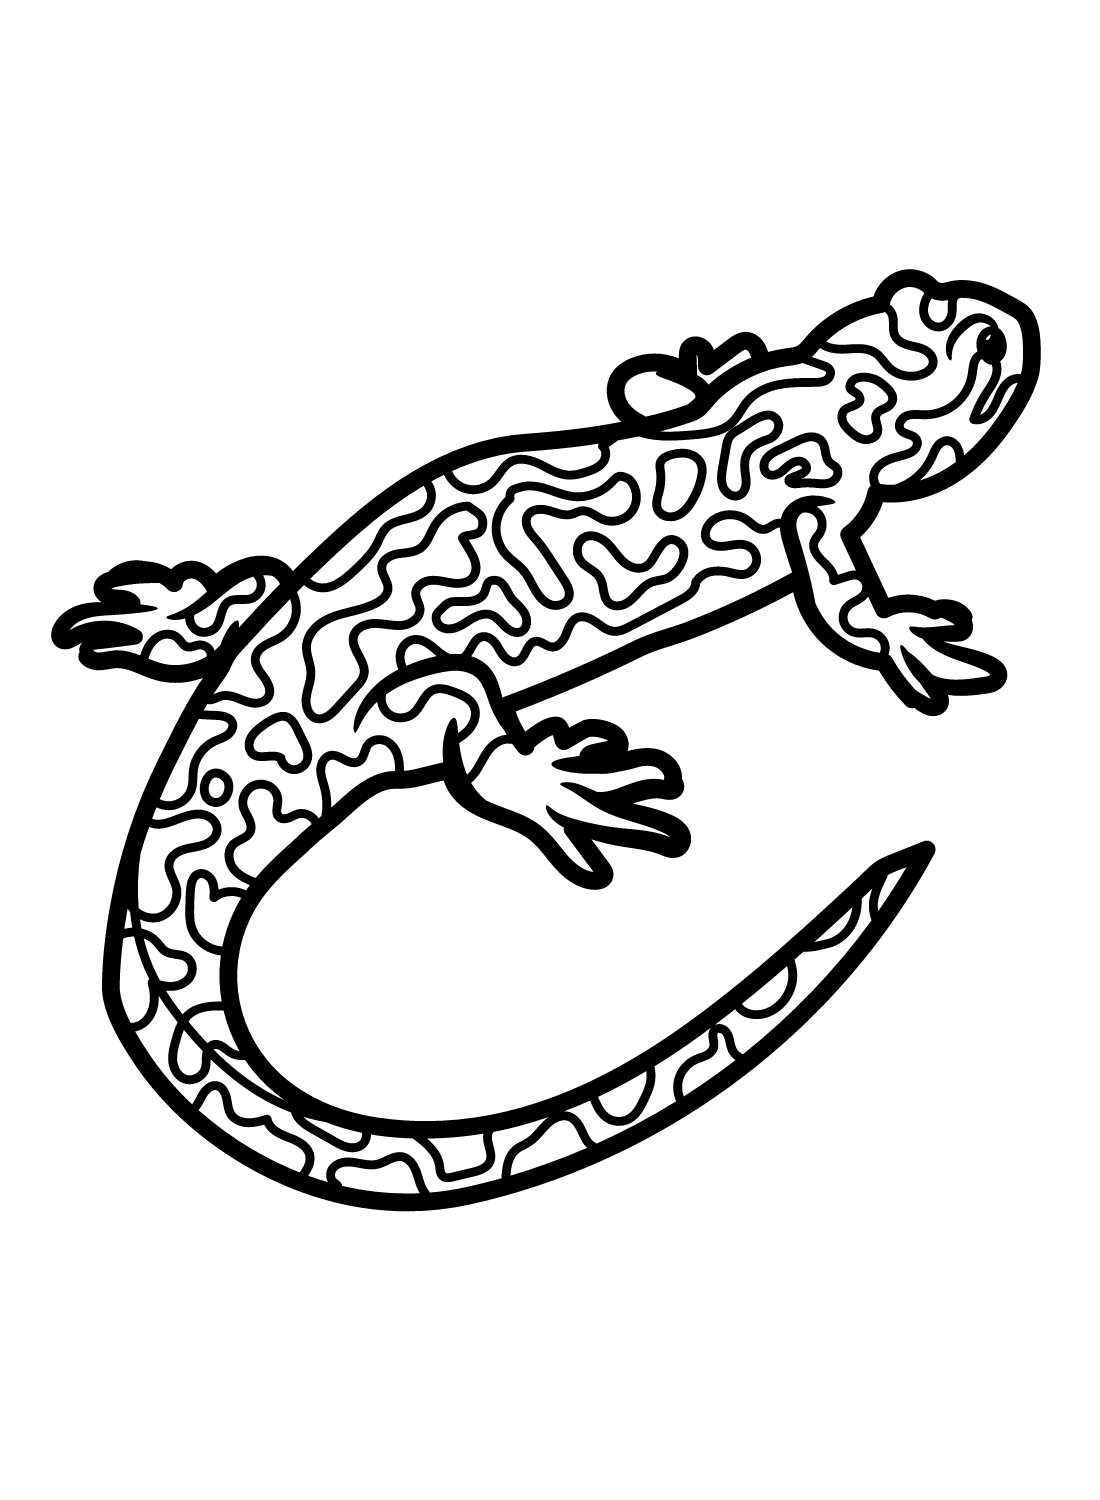 Tijgersalamander van Salamander